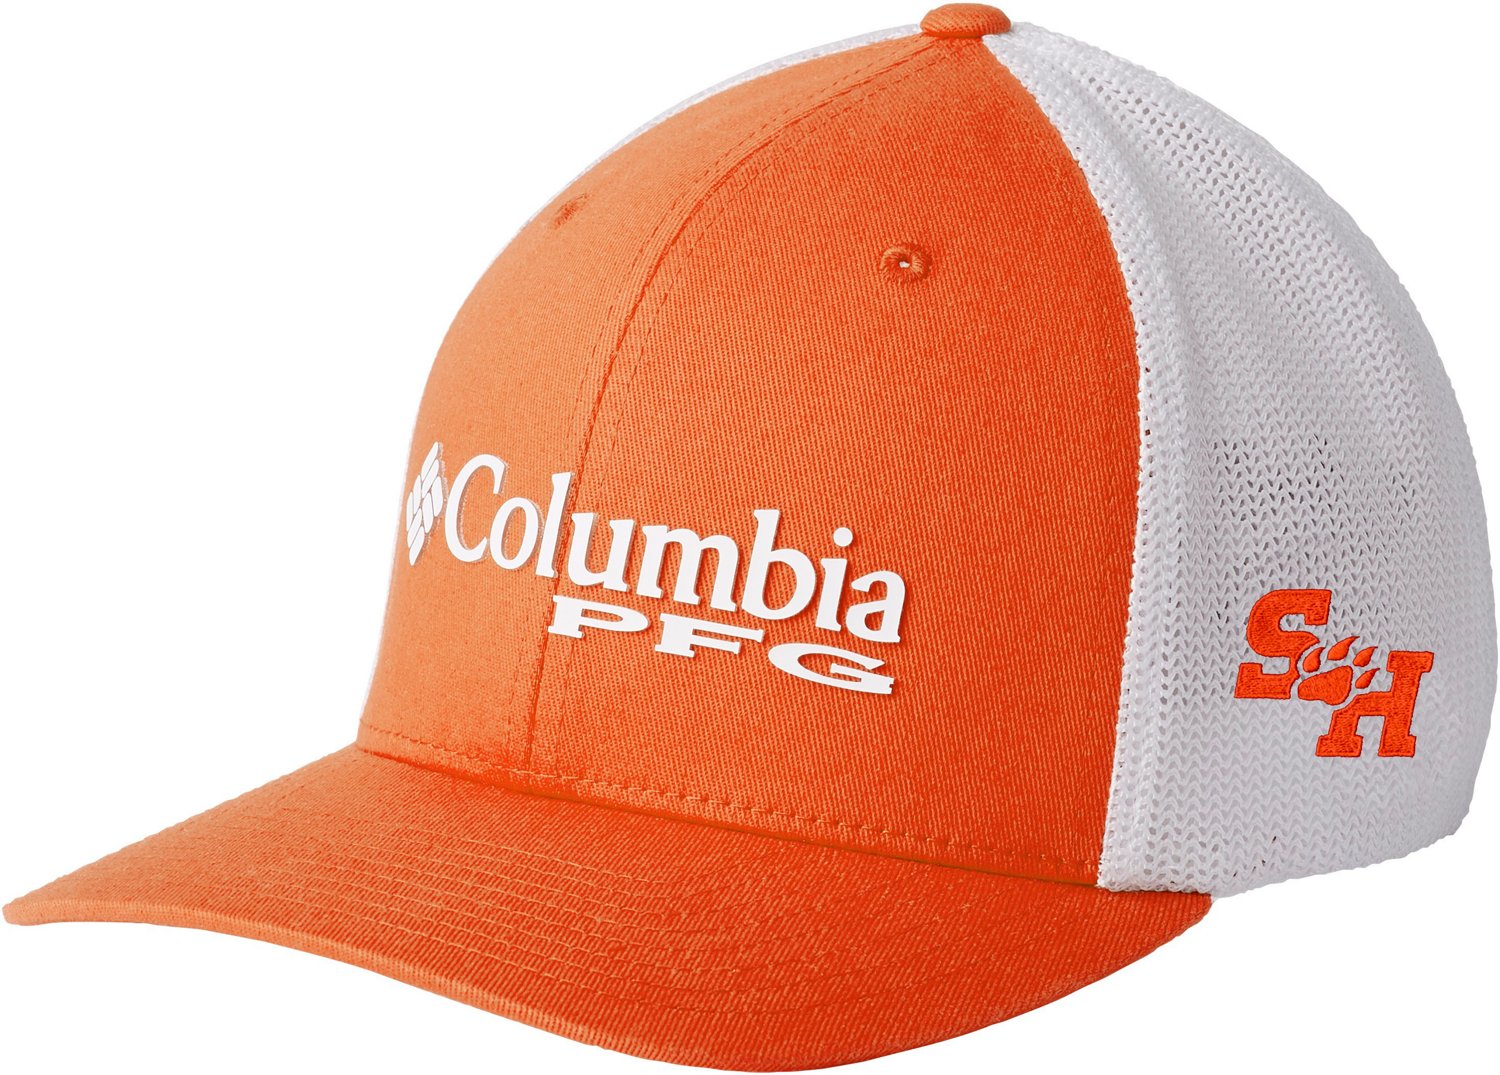 Columbia Sportswear Men's Sam Houston State University PFG Ball Cap